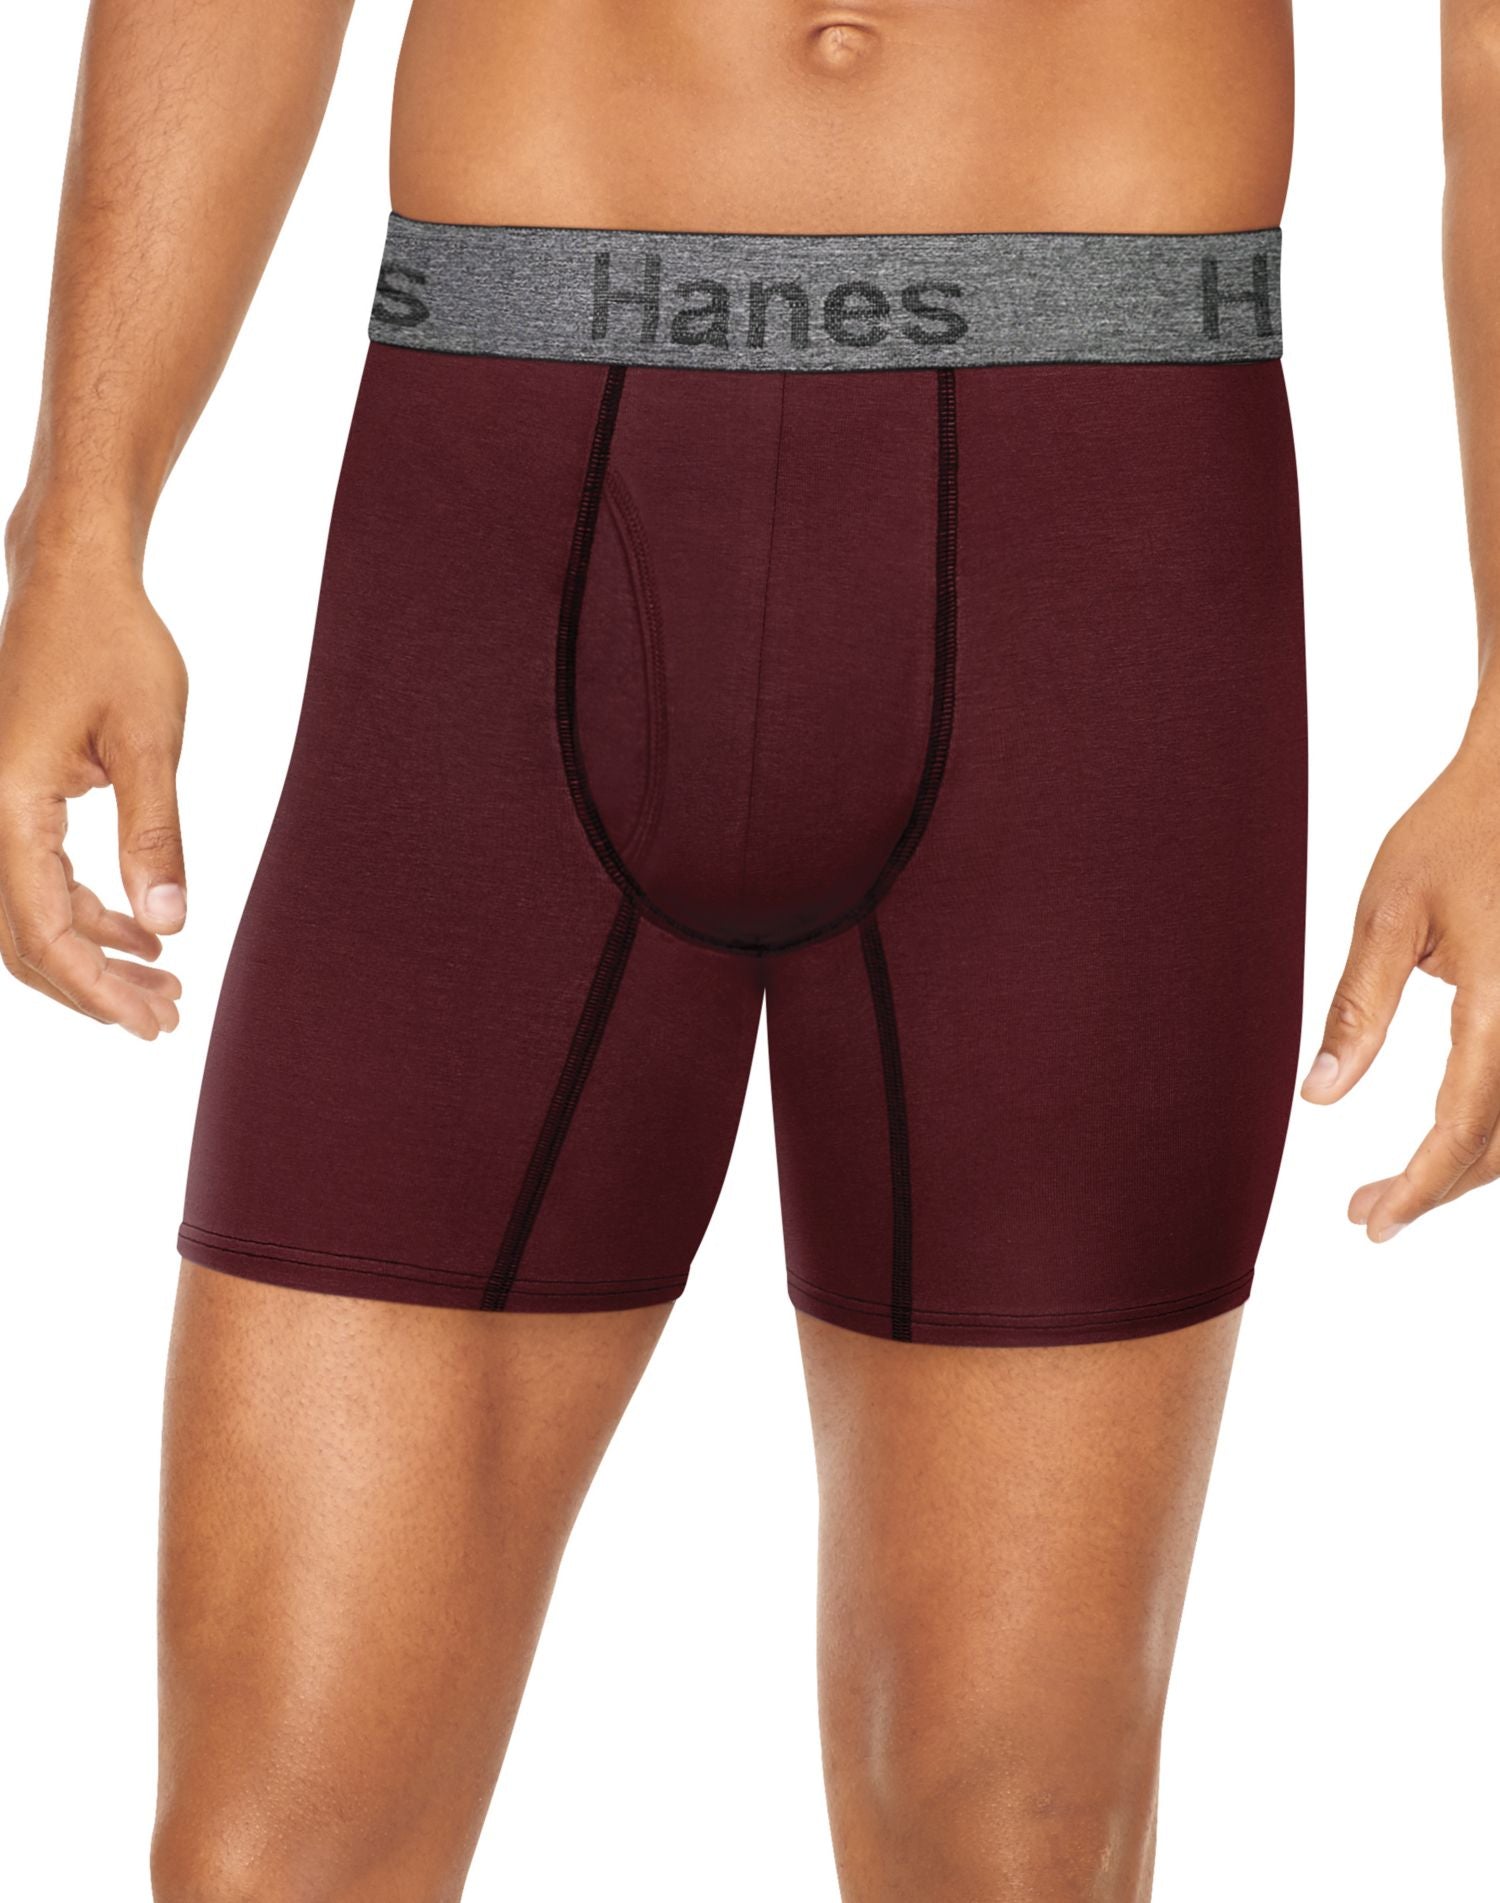 Soft hanes mens underwear For Comfort 